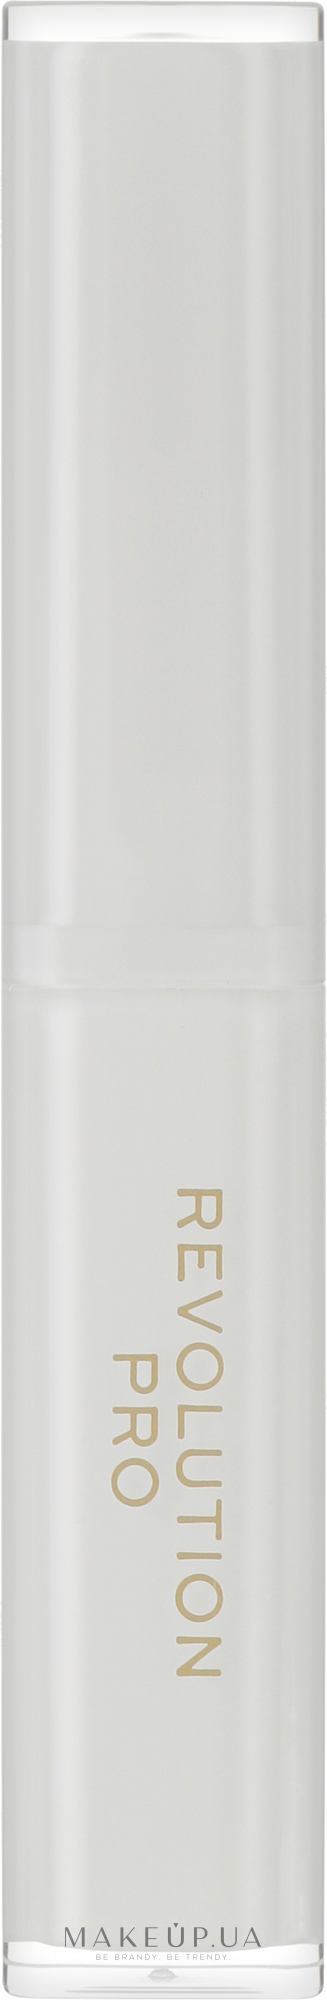 Бальзам для губ - Revolution Pro Protect Conditioning Lip Balm SPF15 — фото 1.6g